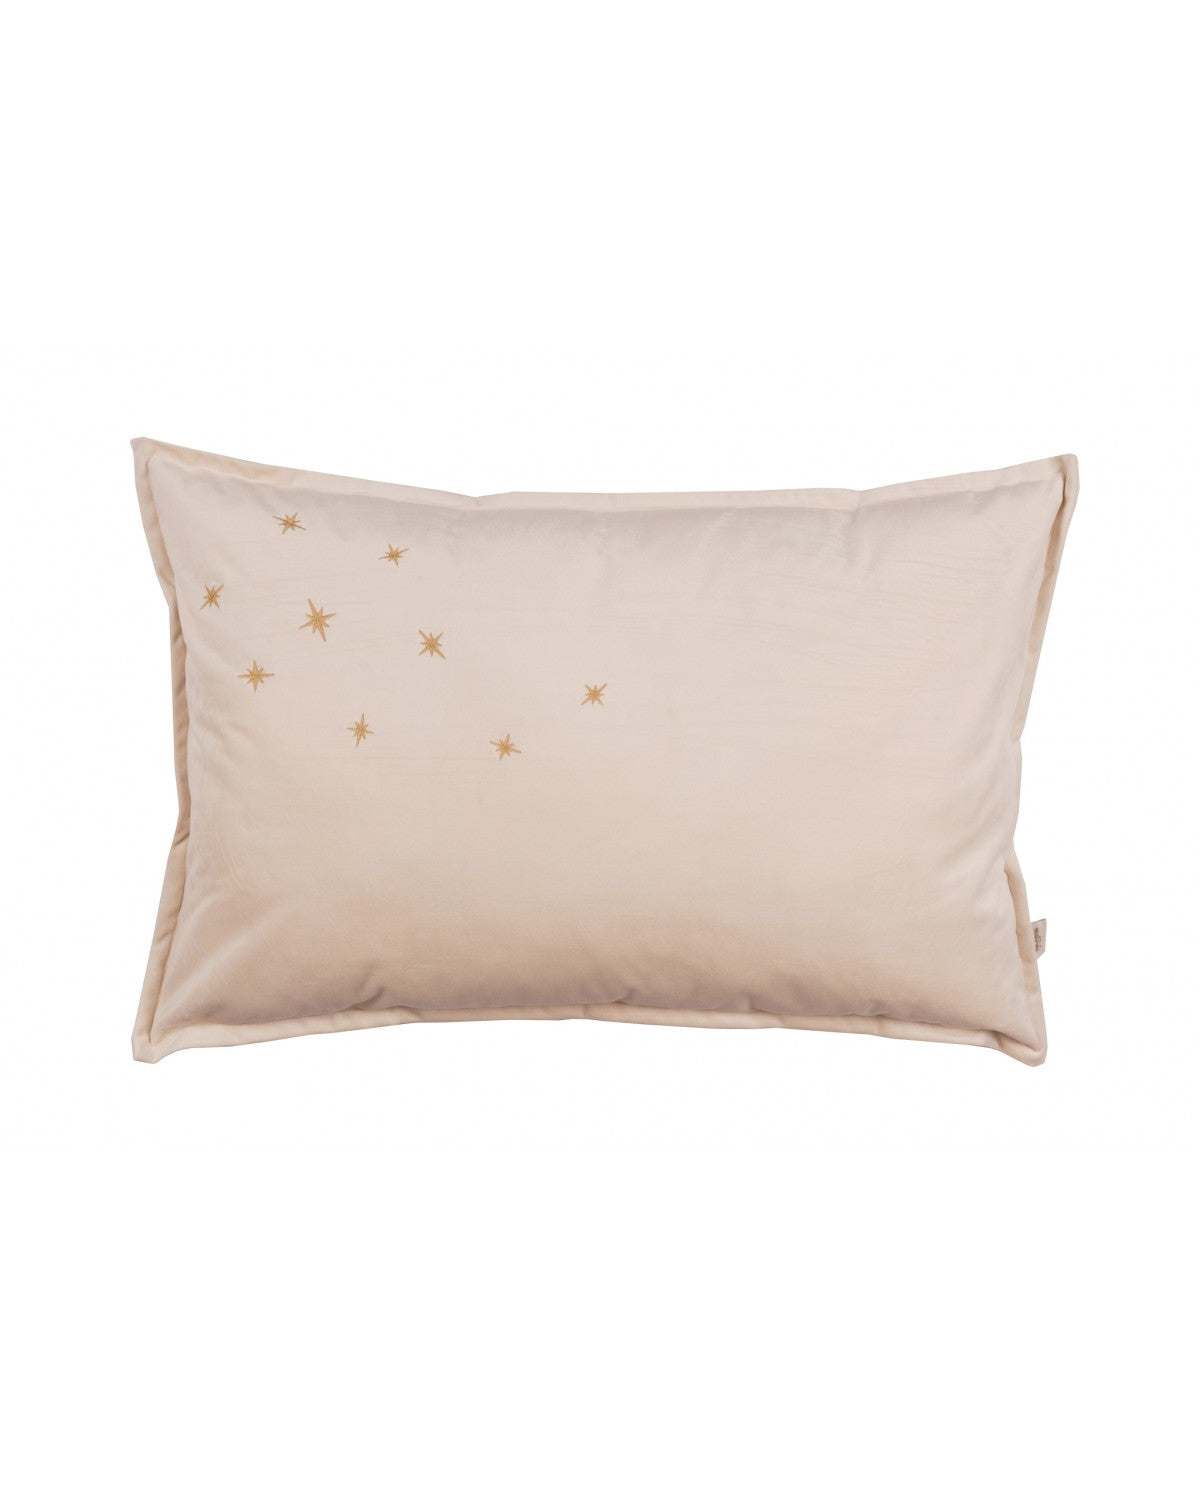 Personalised Luxury Velvet Cushion - Cream